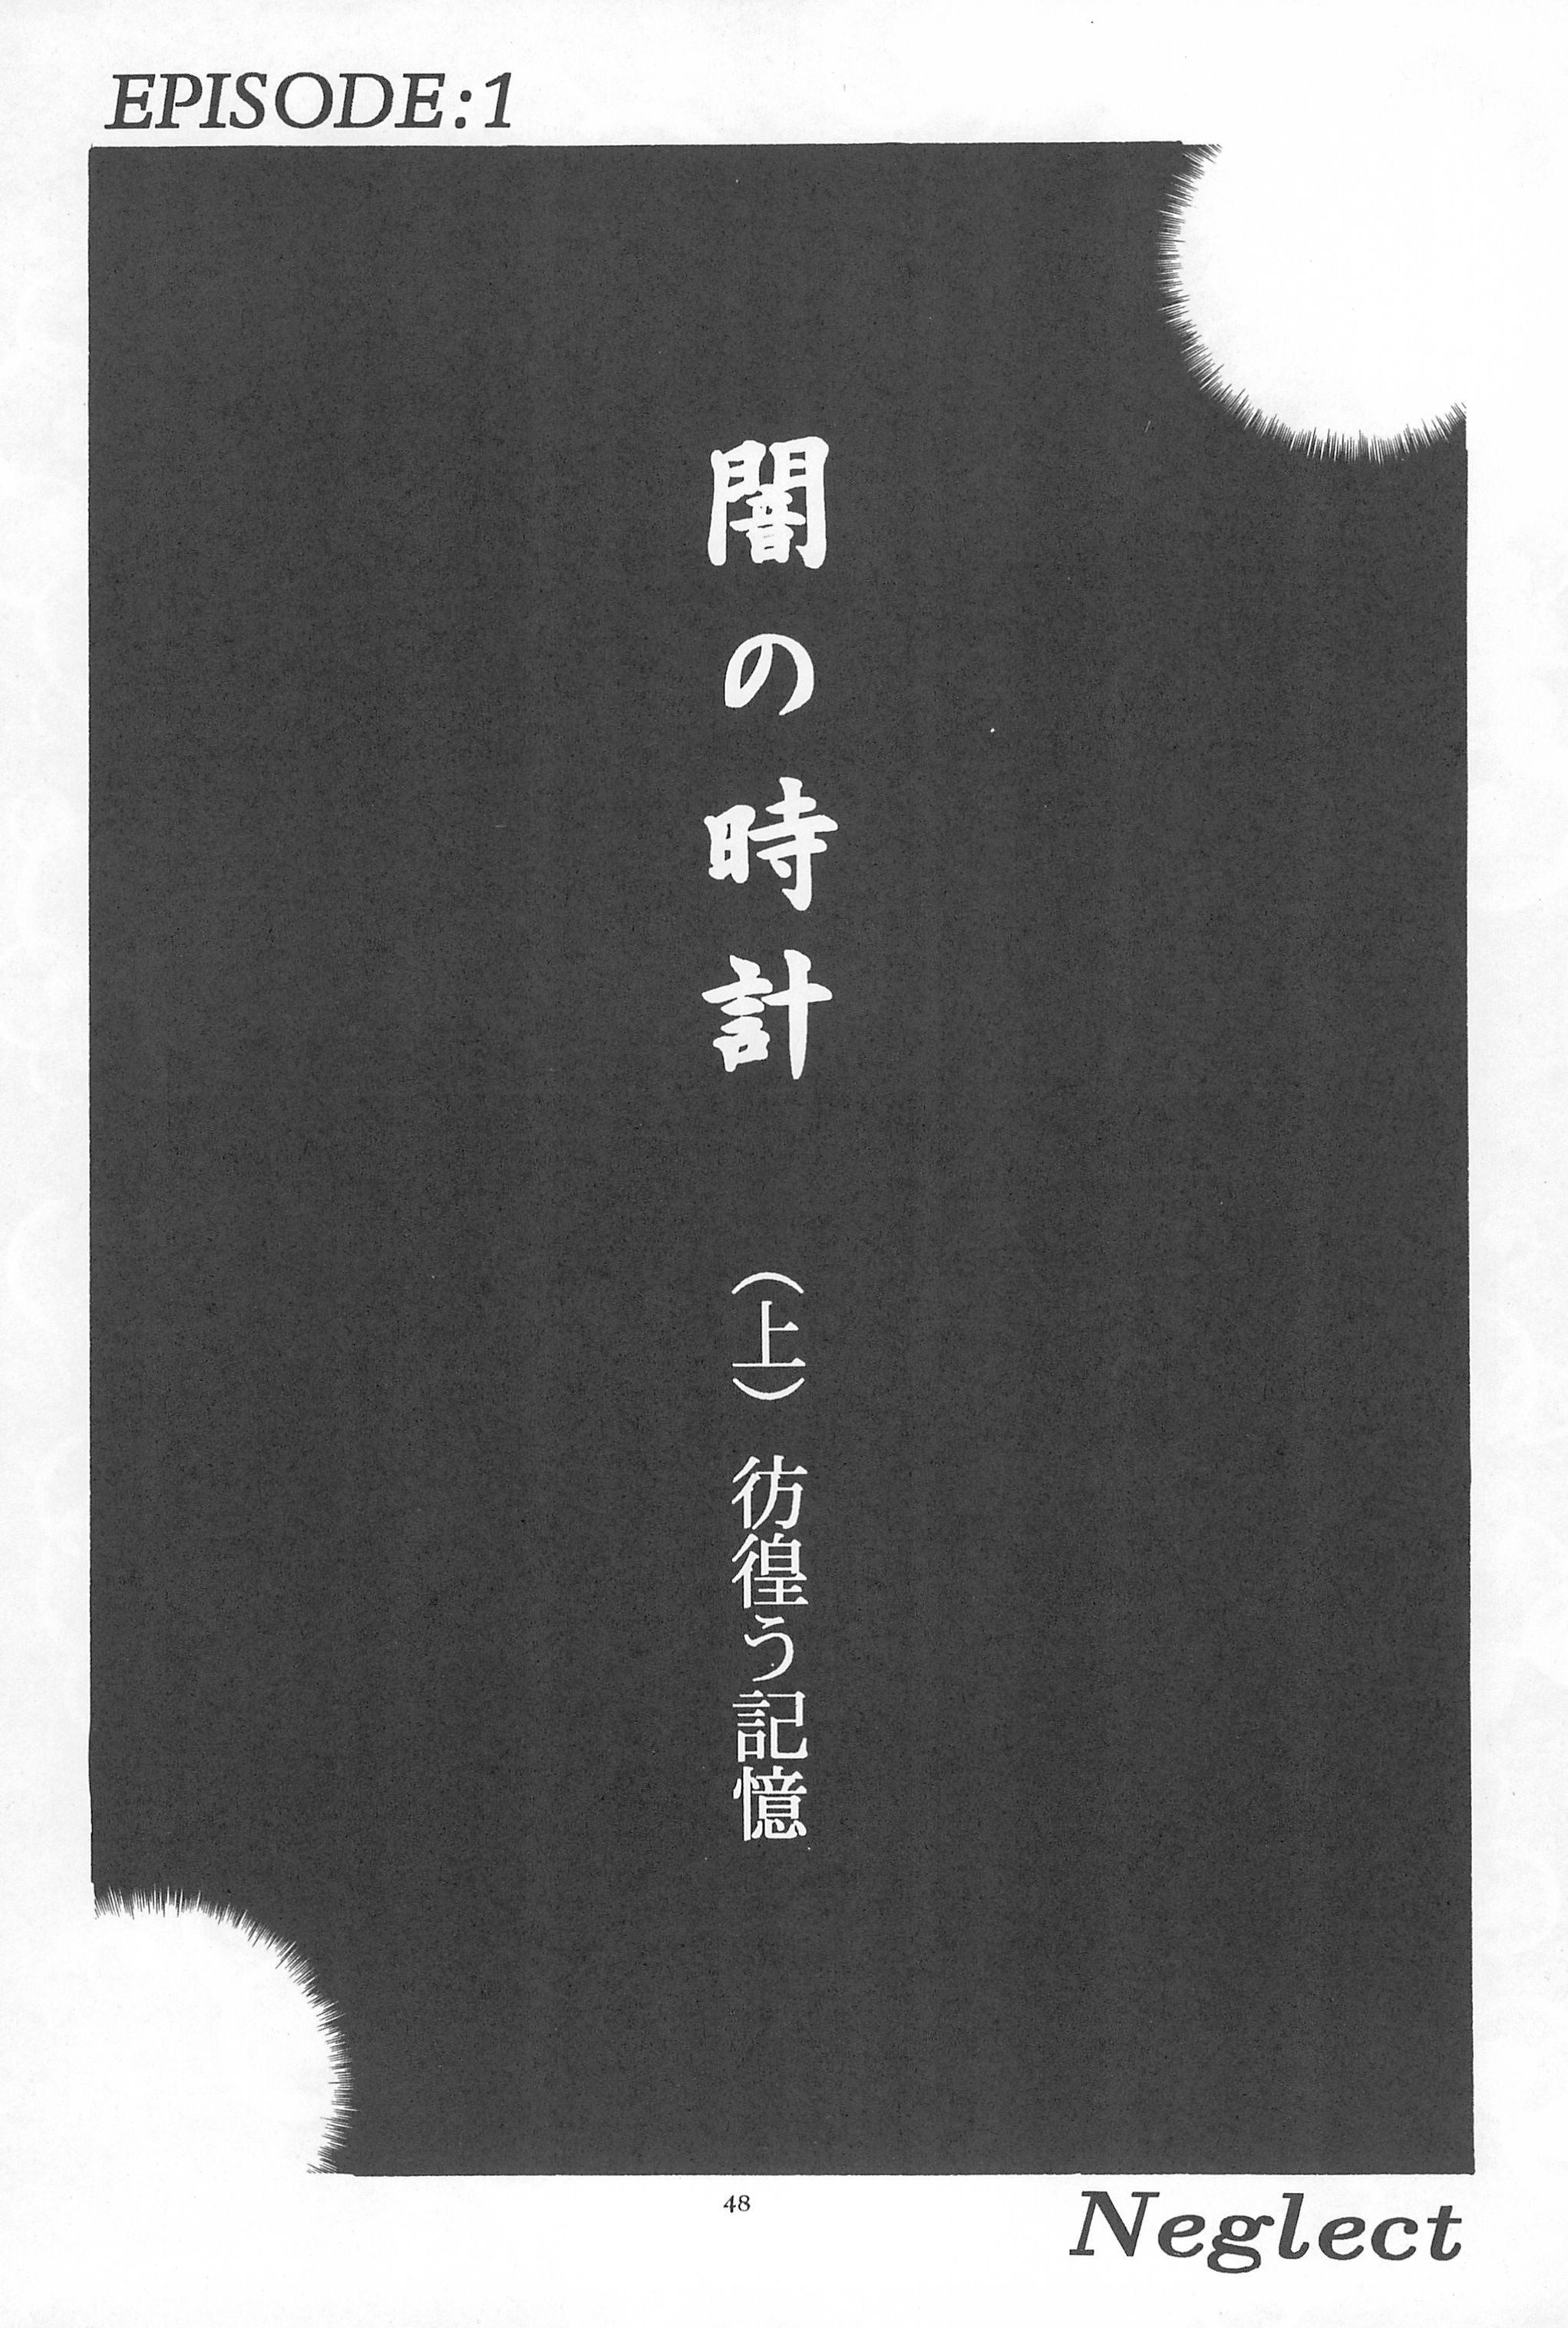 (Cレヴォ19) [あなごパイ (こんどう辰也、坂都胡桃)] Black Box Vol.001 完全版